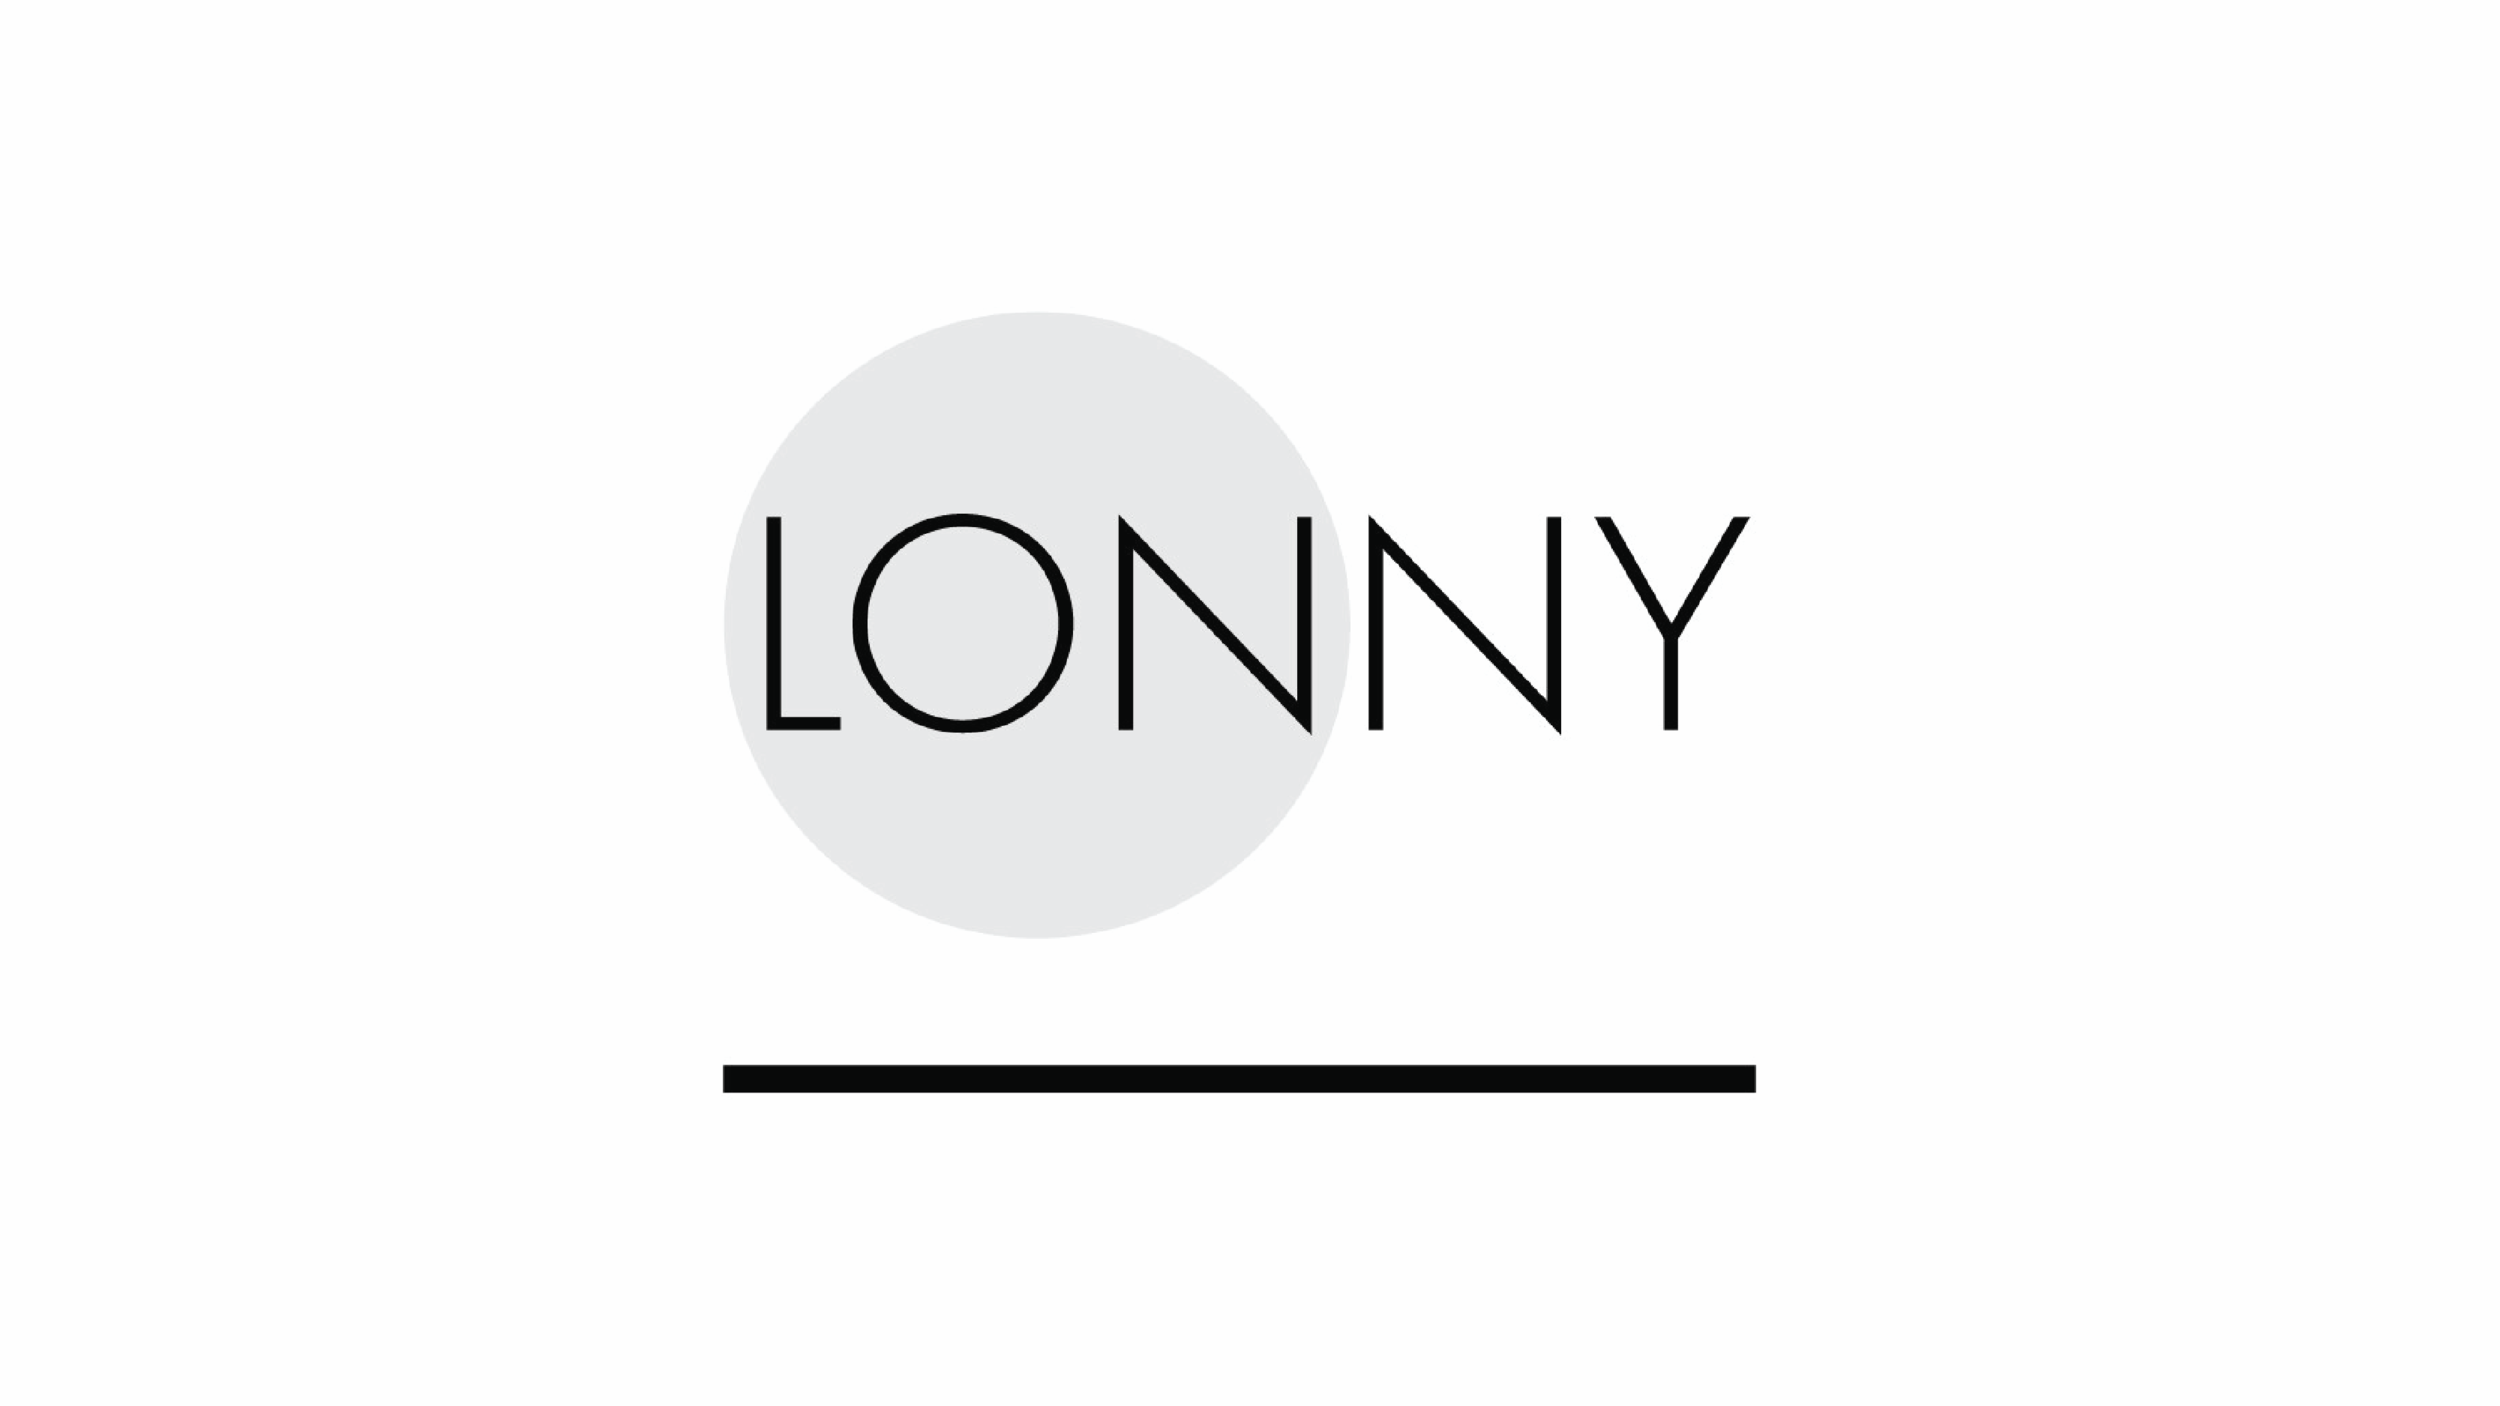 Lonny logo - white background.png